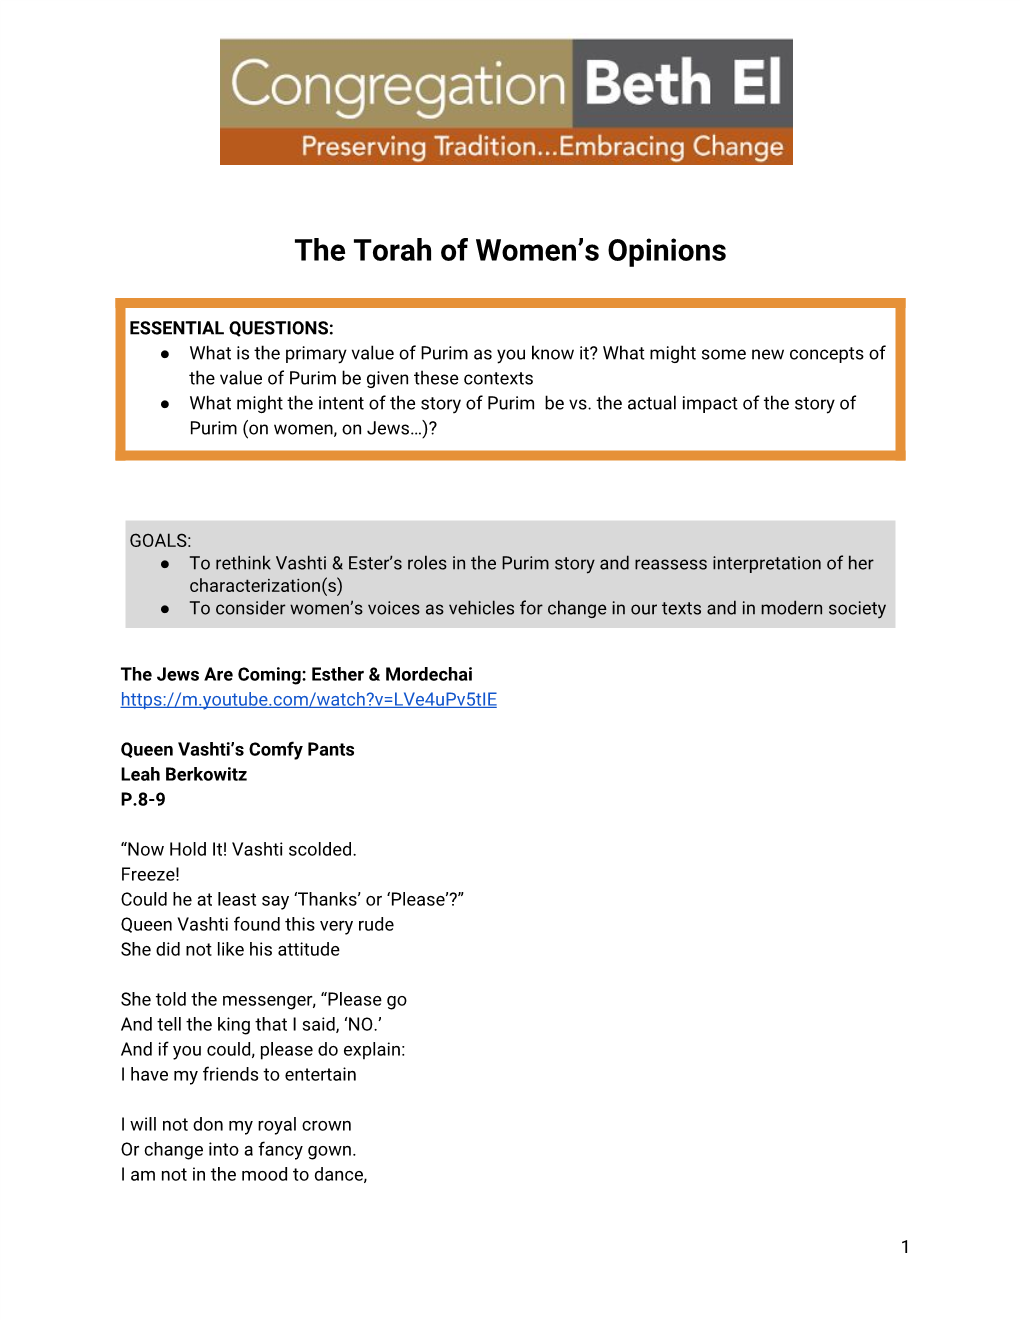 The Torah of Women's Opinions